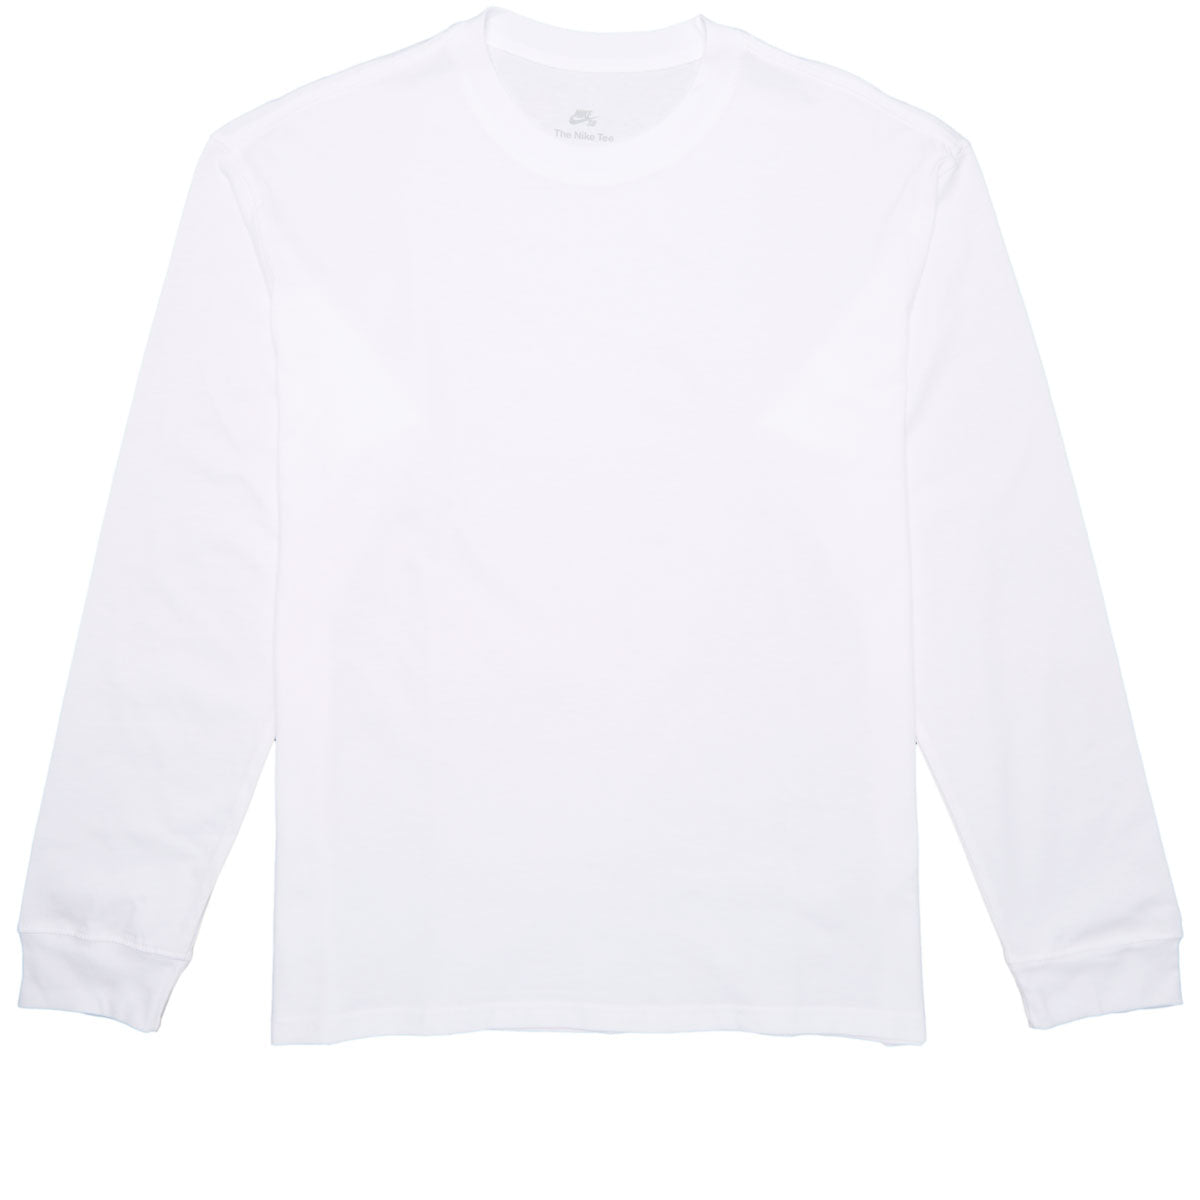 Nike SB Essentials Long Sleeve T-Shirt - White image 1